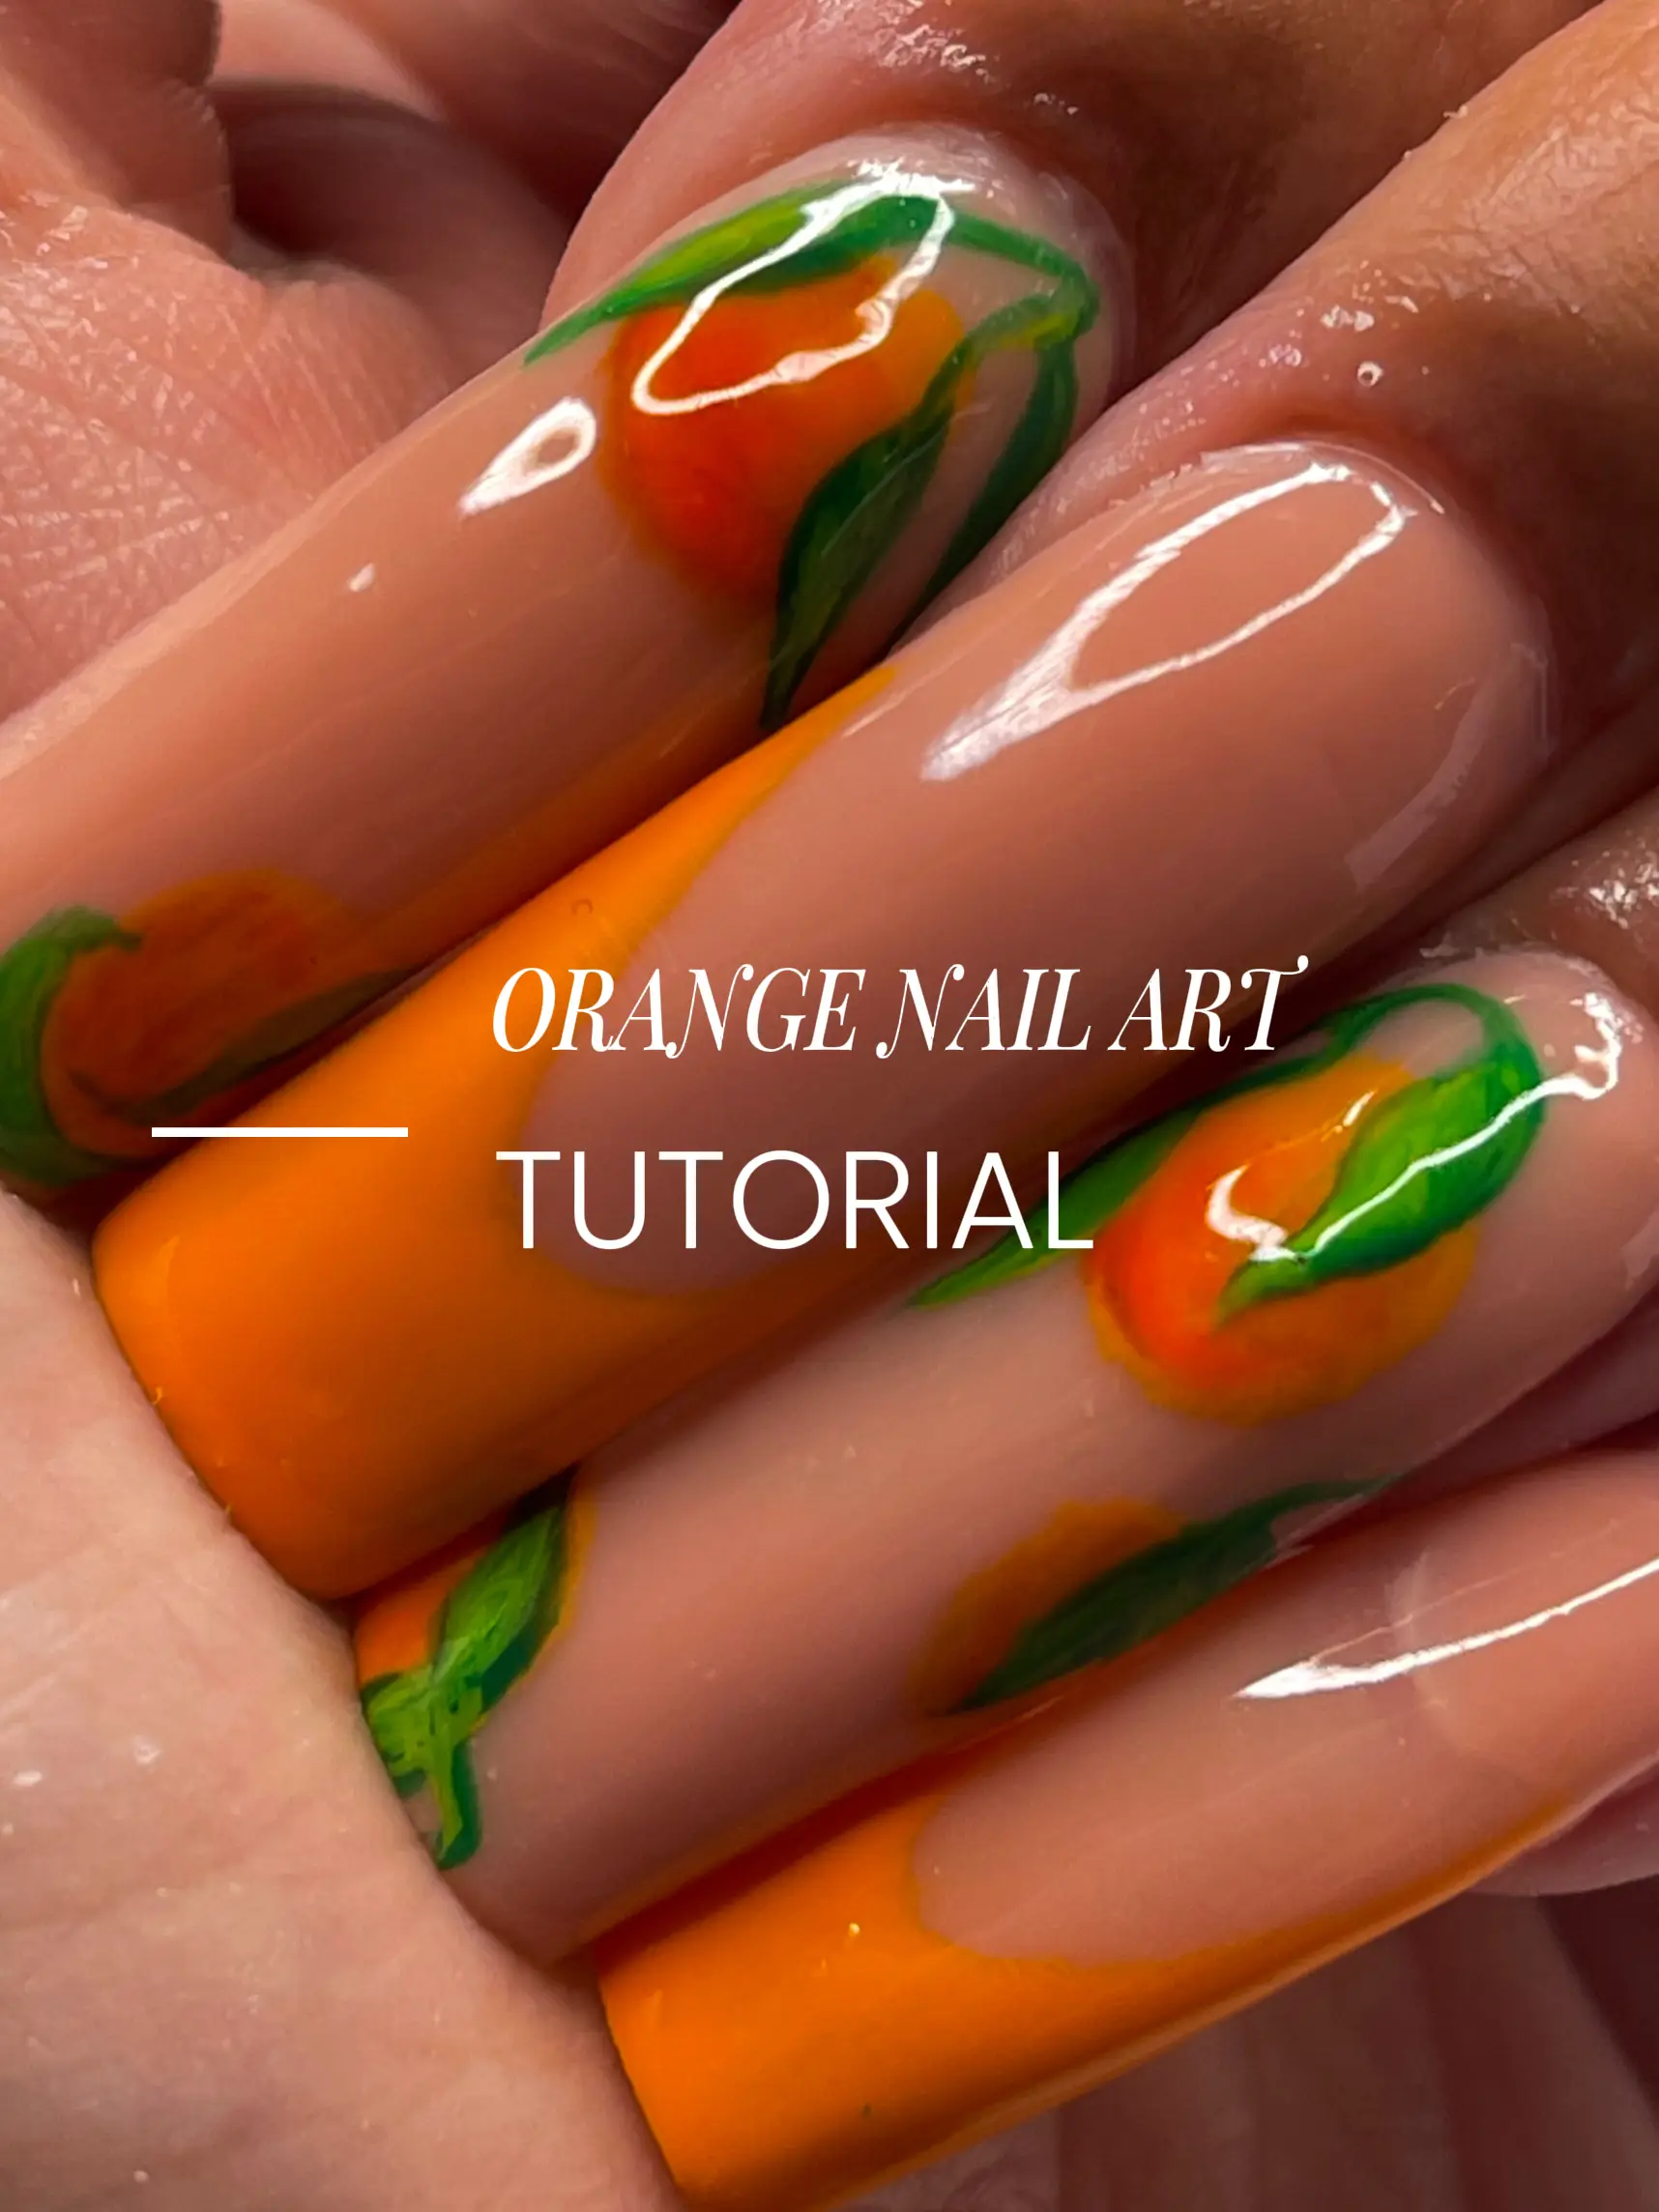 orange nail art tutorial🍊, Video published by doperthnurnails